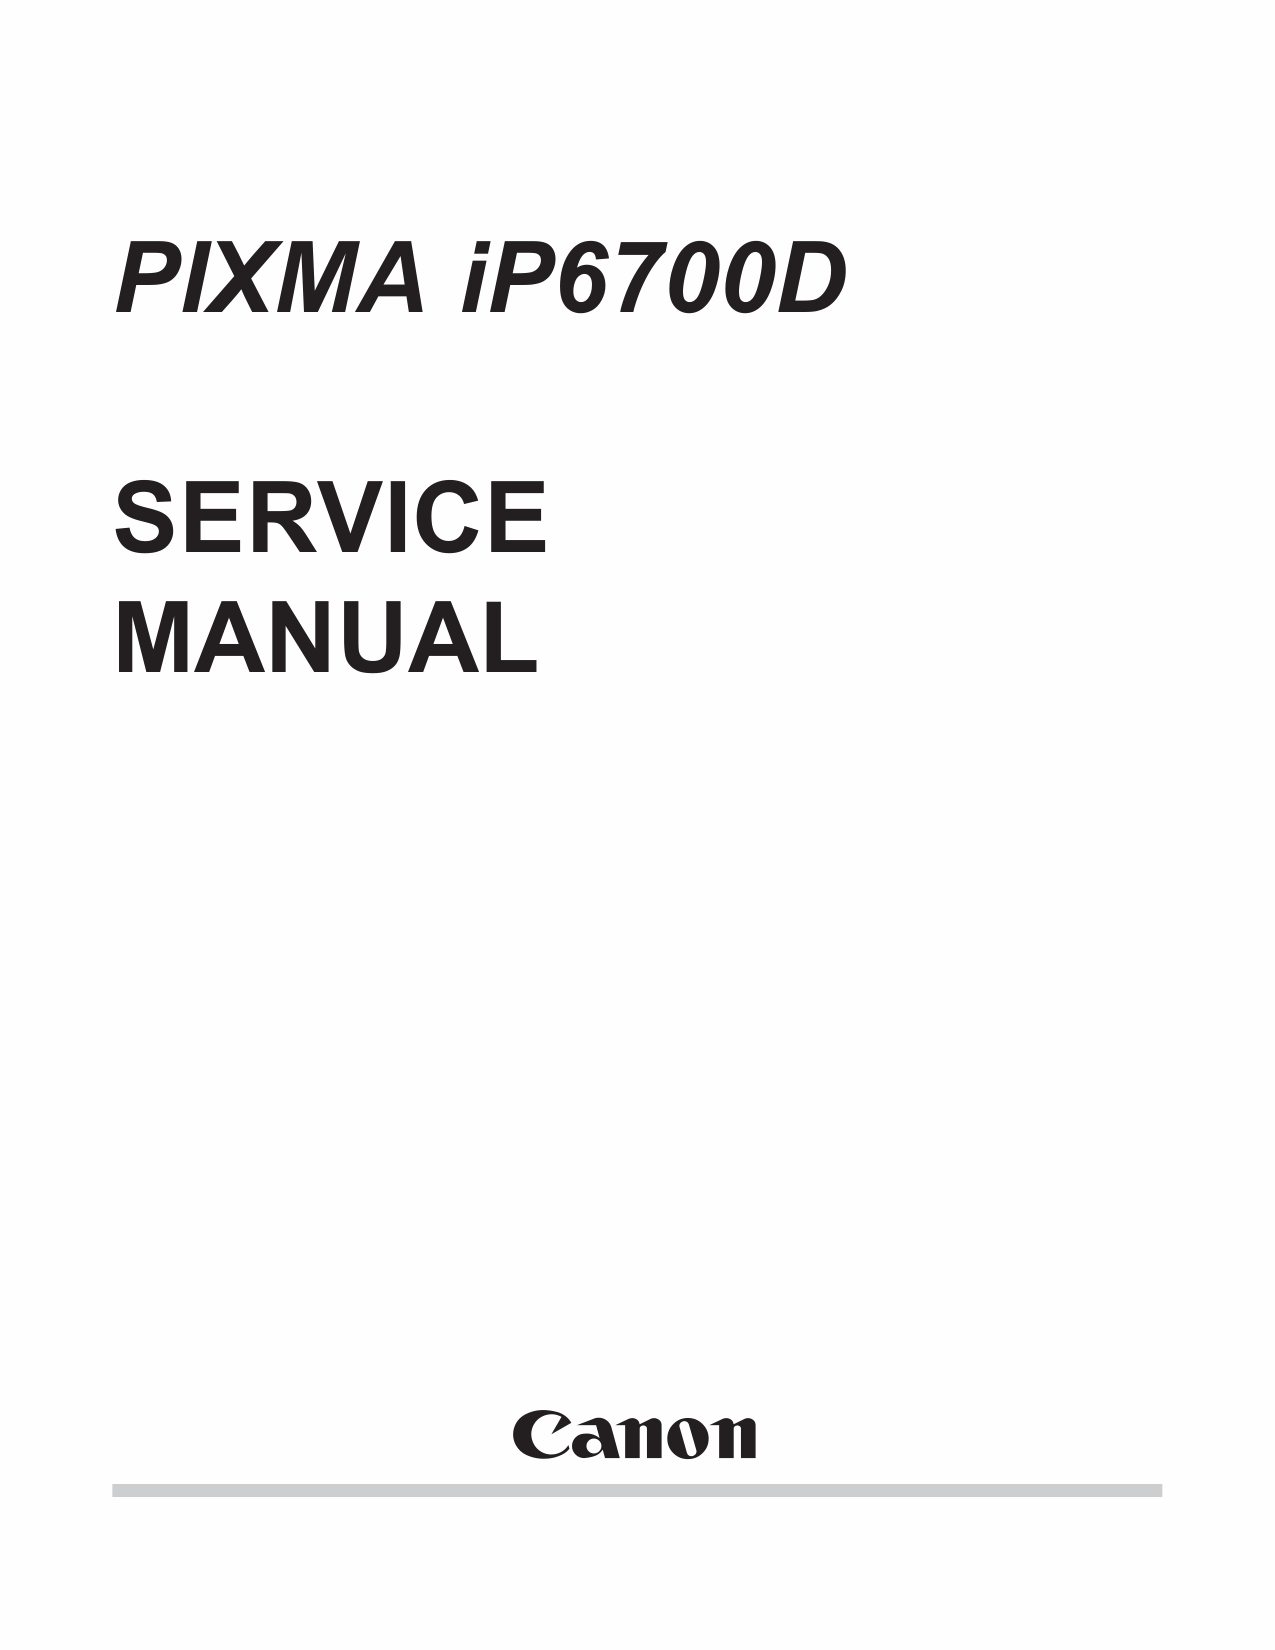 Canon PIXMA iP6700D Parts and Service Manual-1